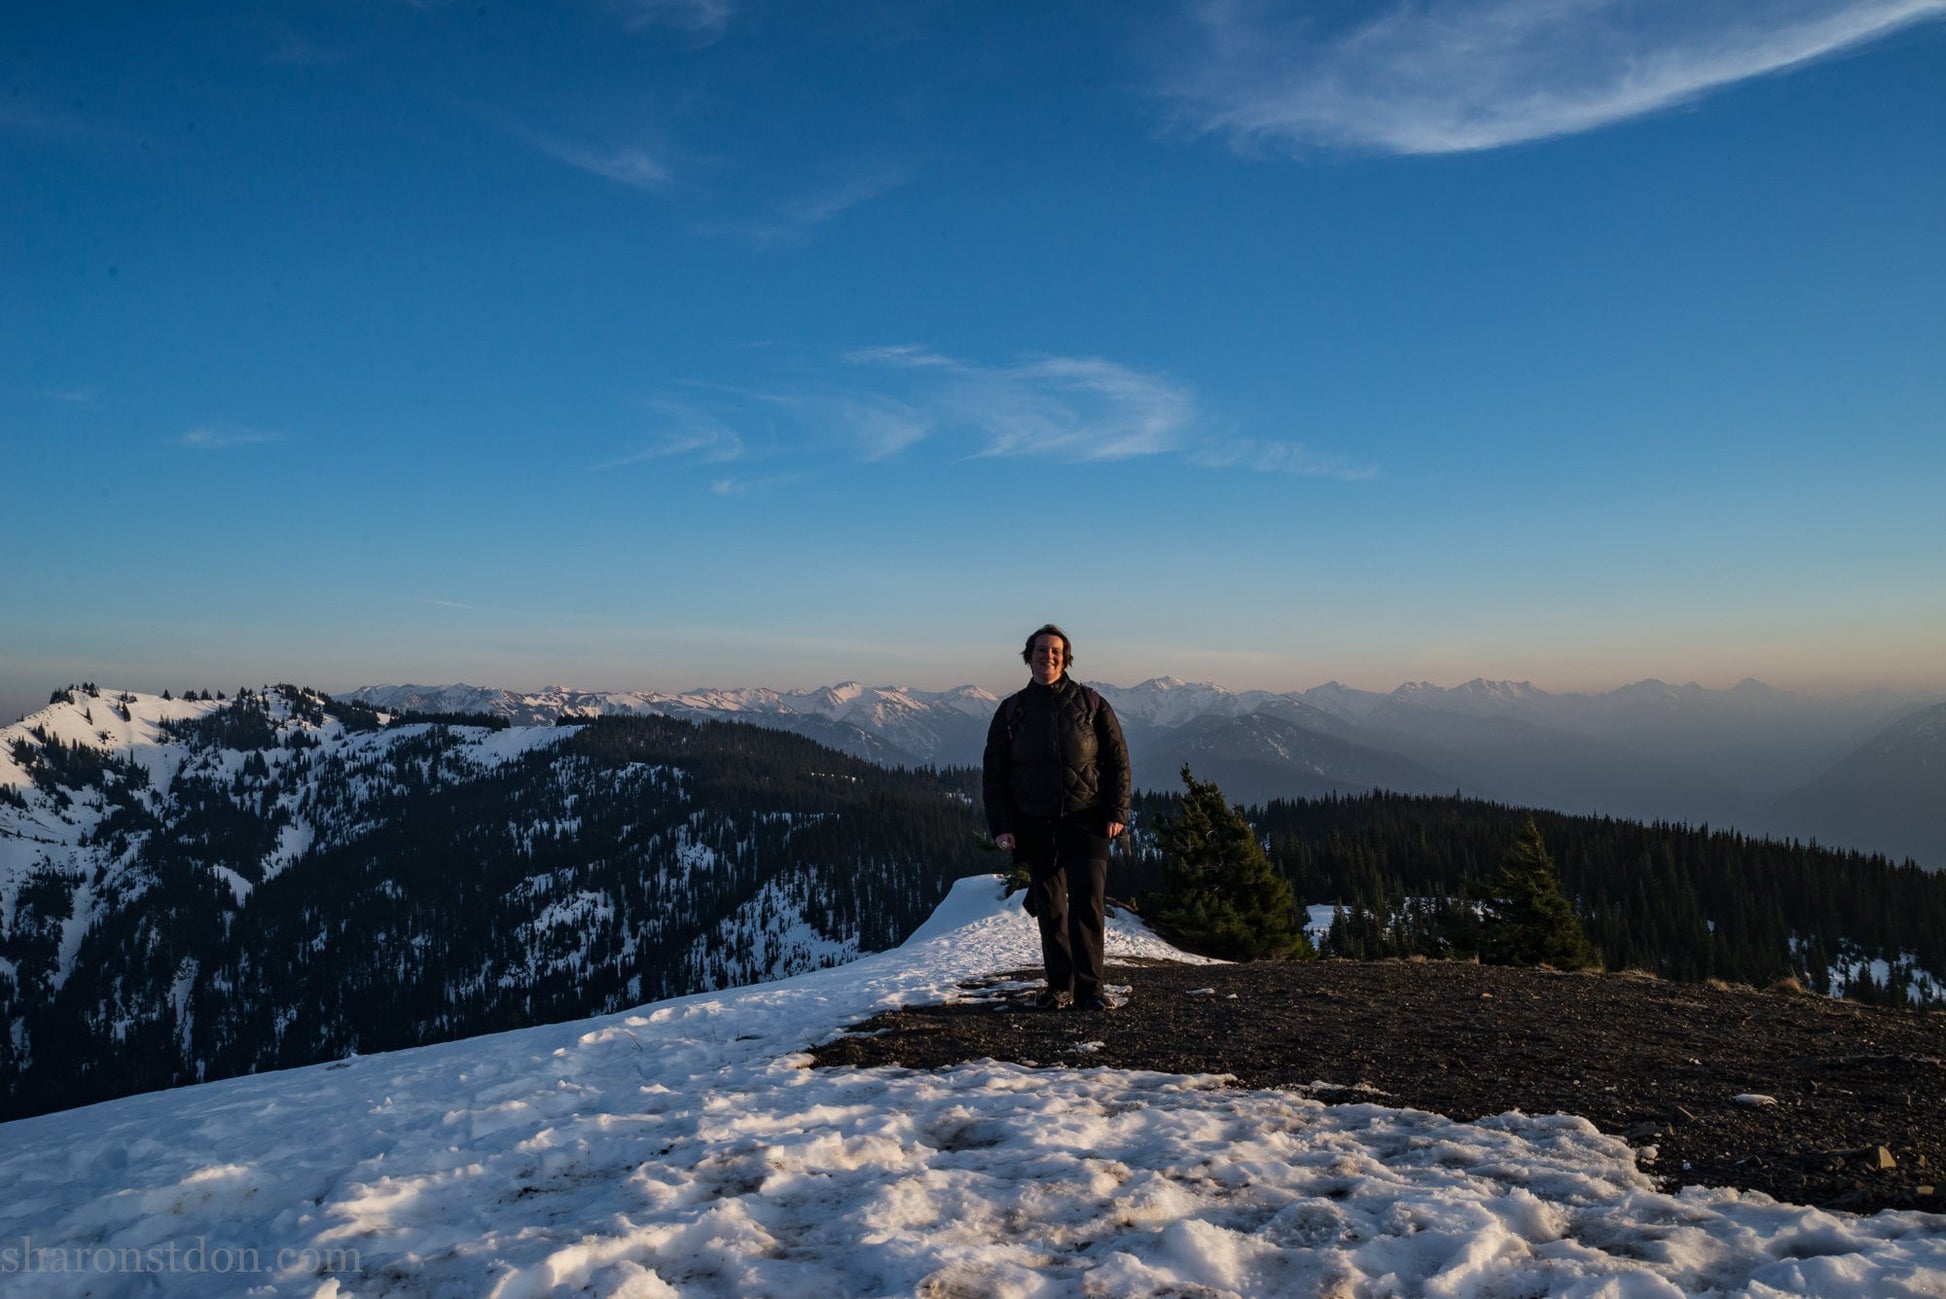 Sharon SaintDon standing on a ridge with snow in Olympic mountains, Washington state, USA.